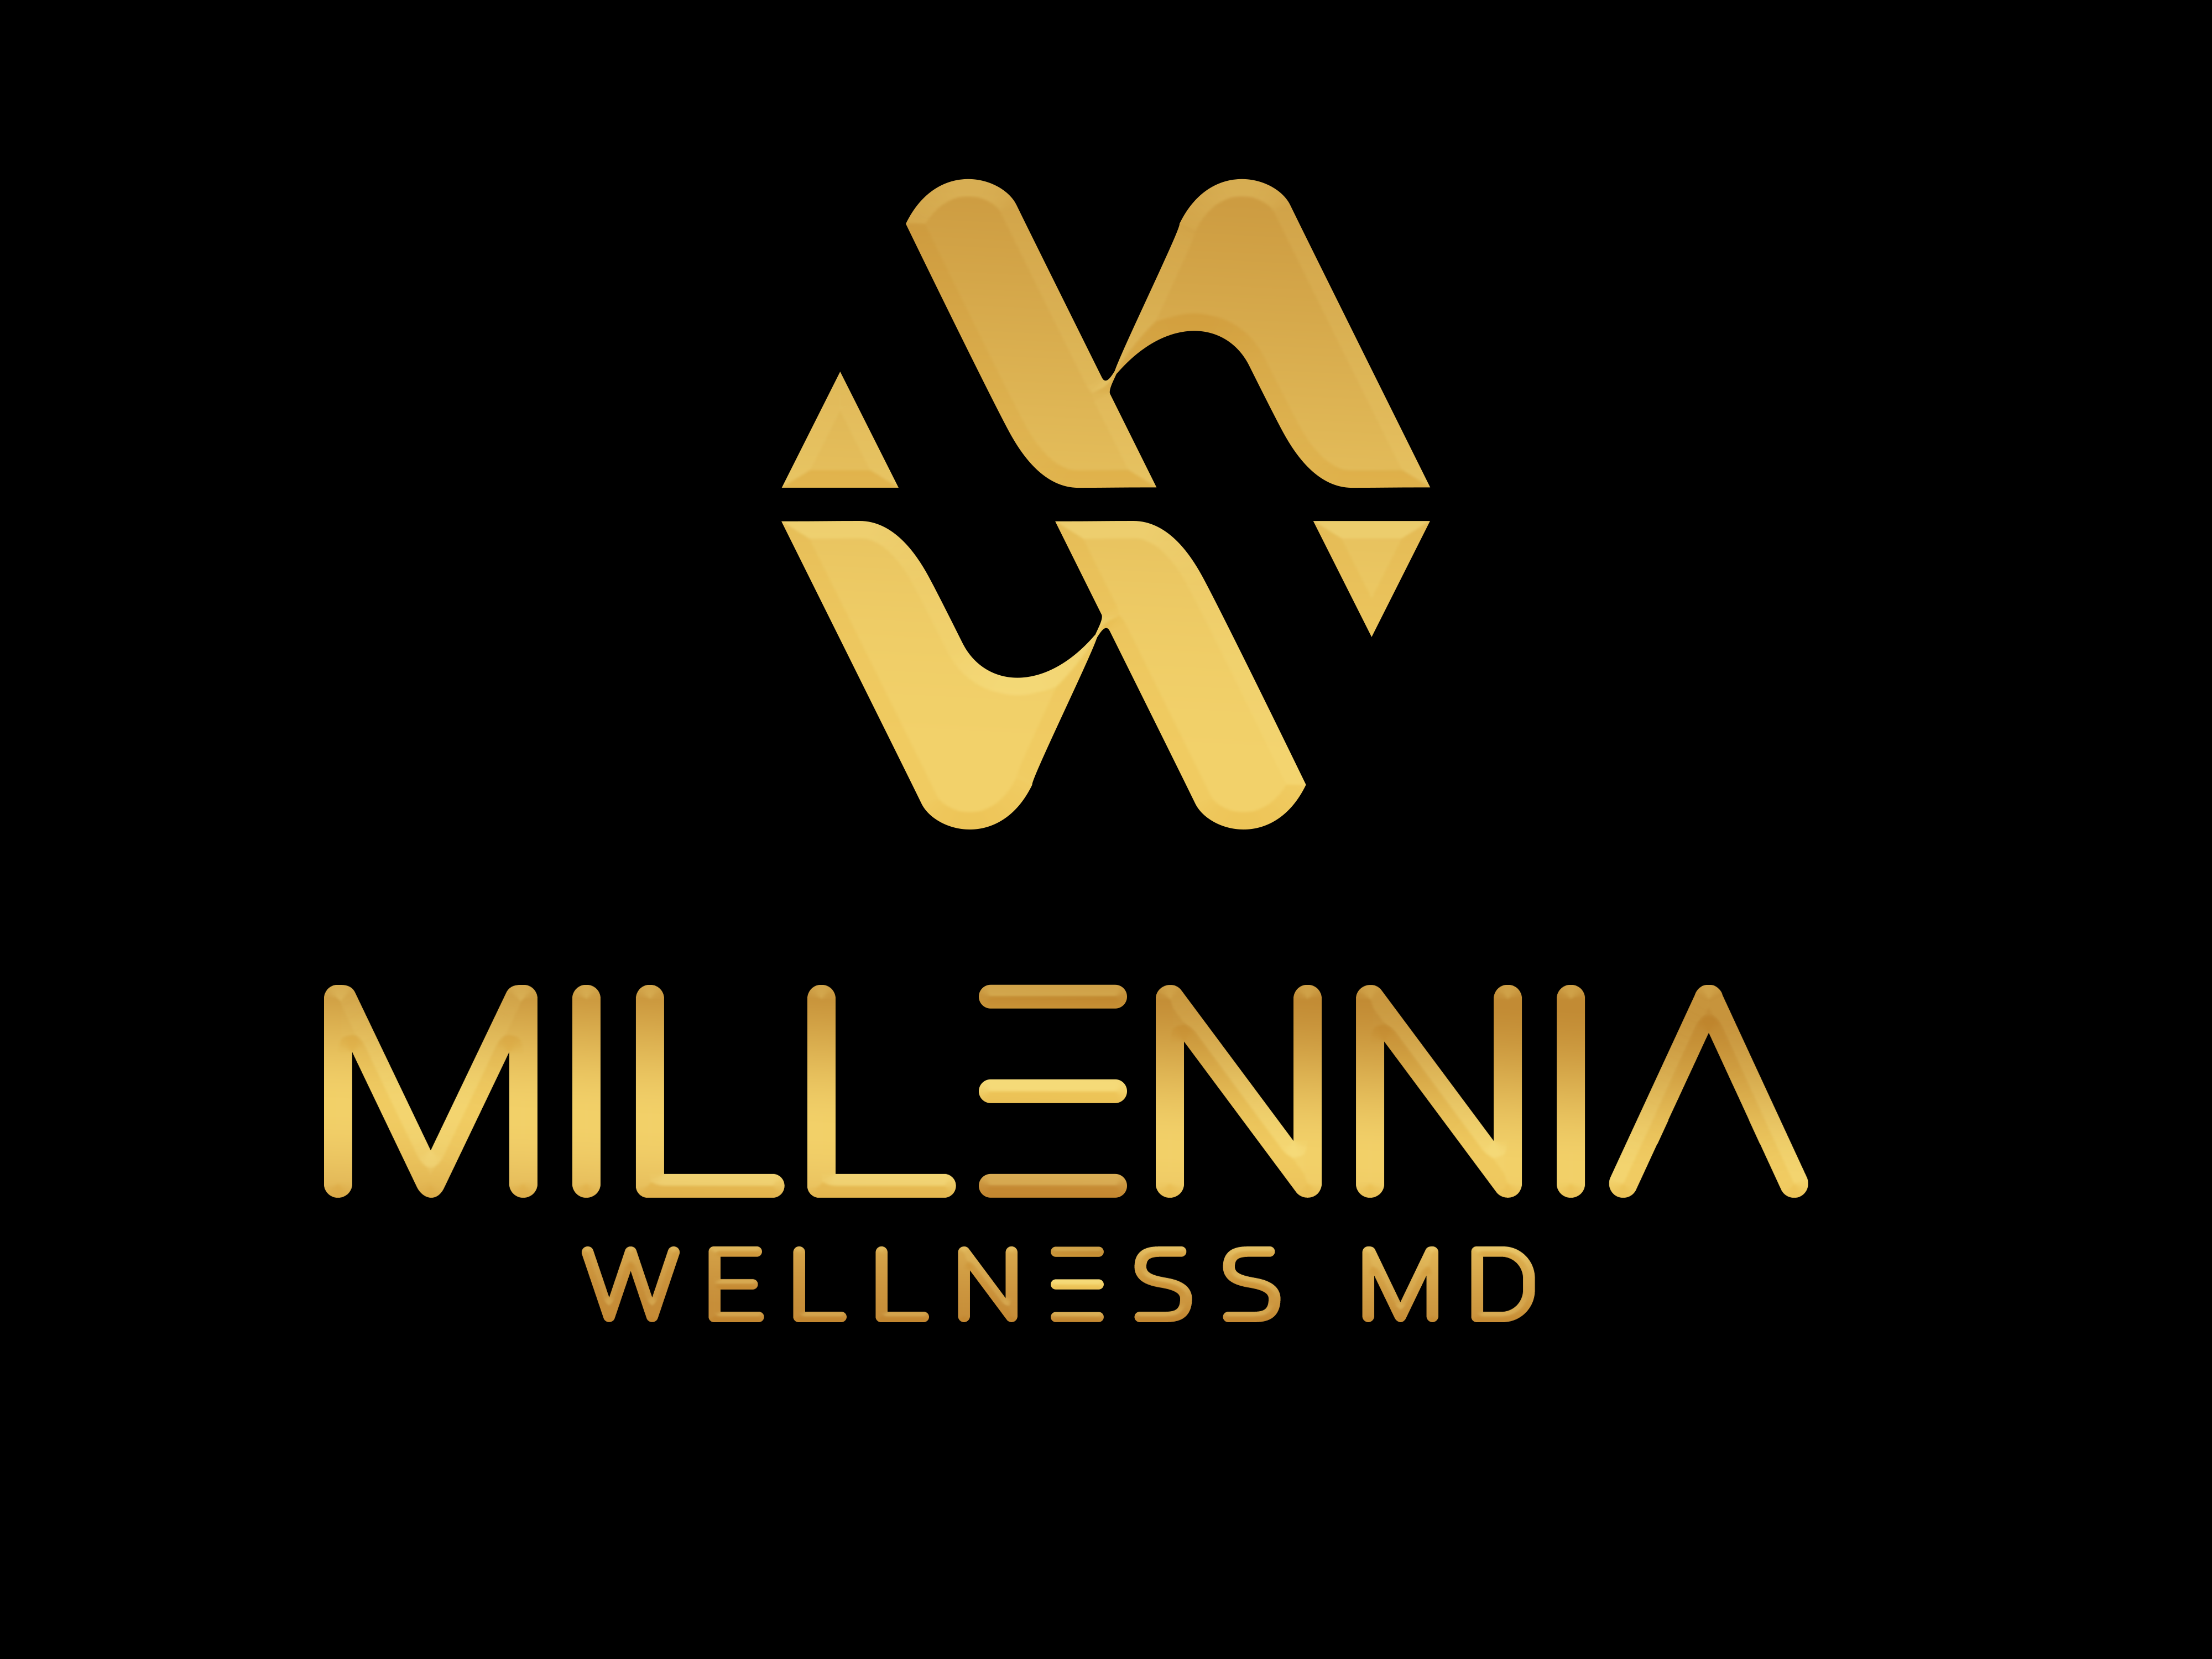 Millennia Wellness MD